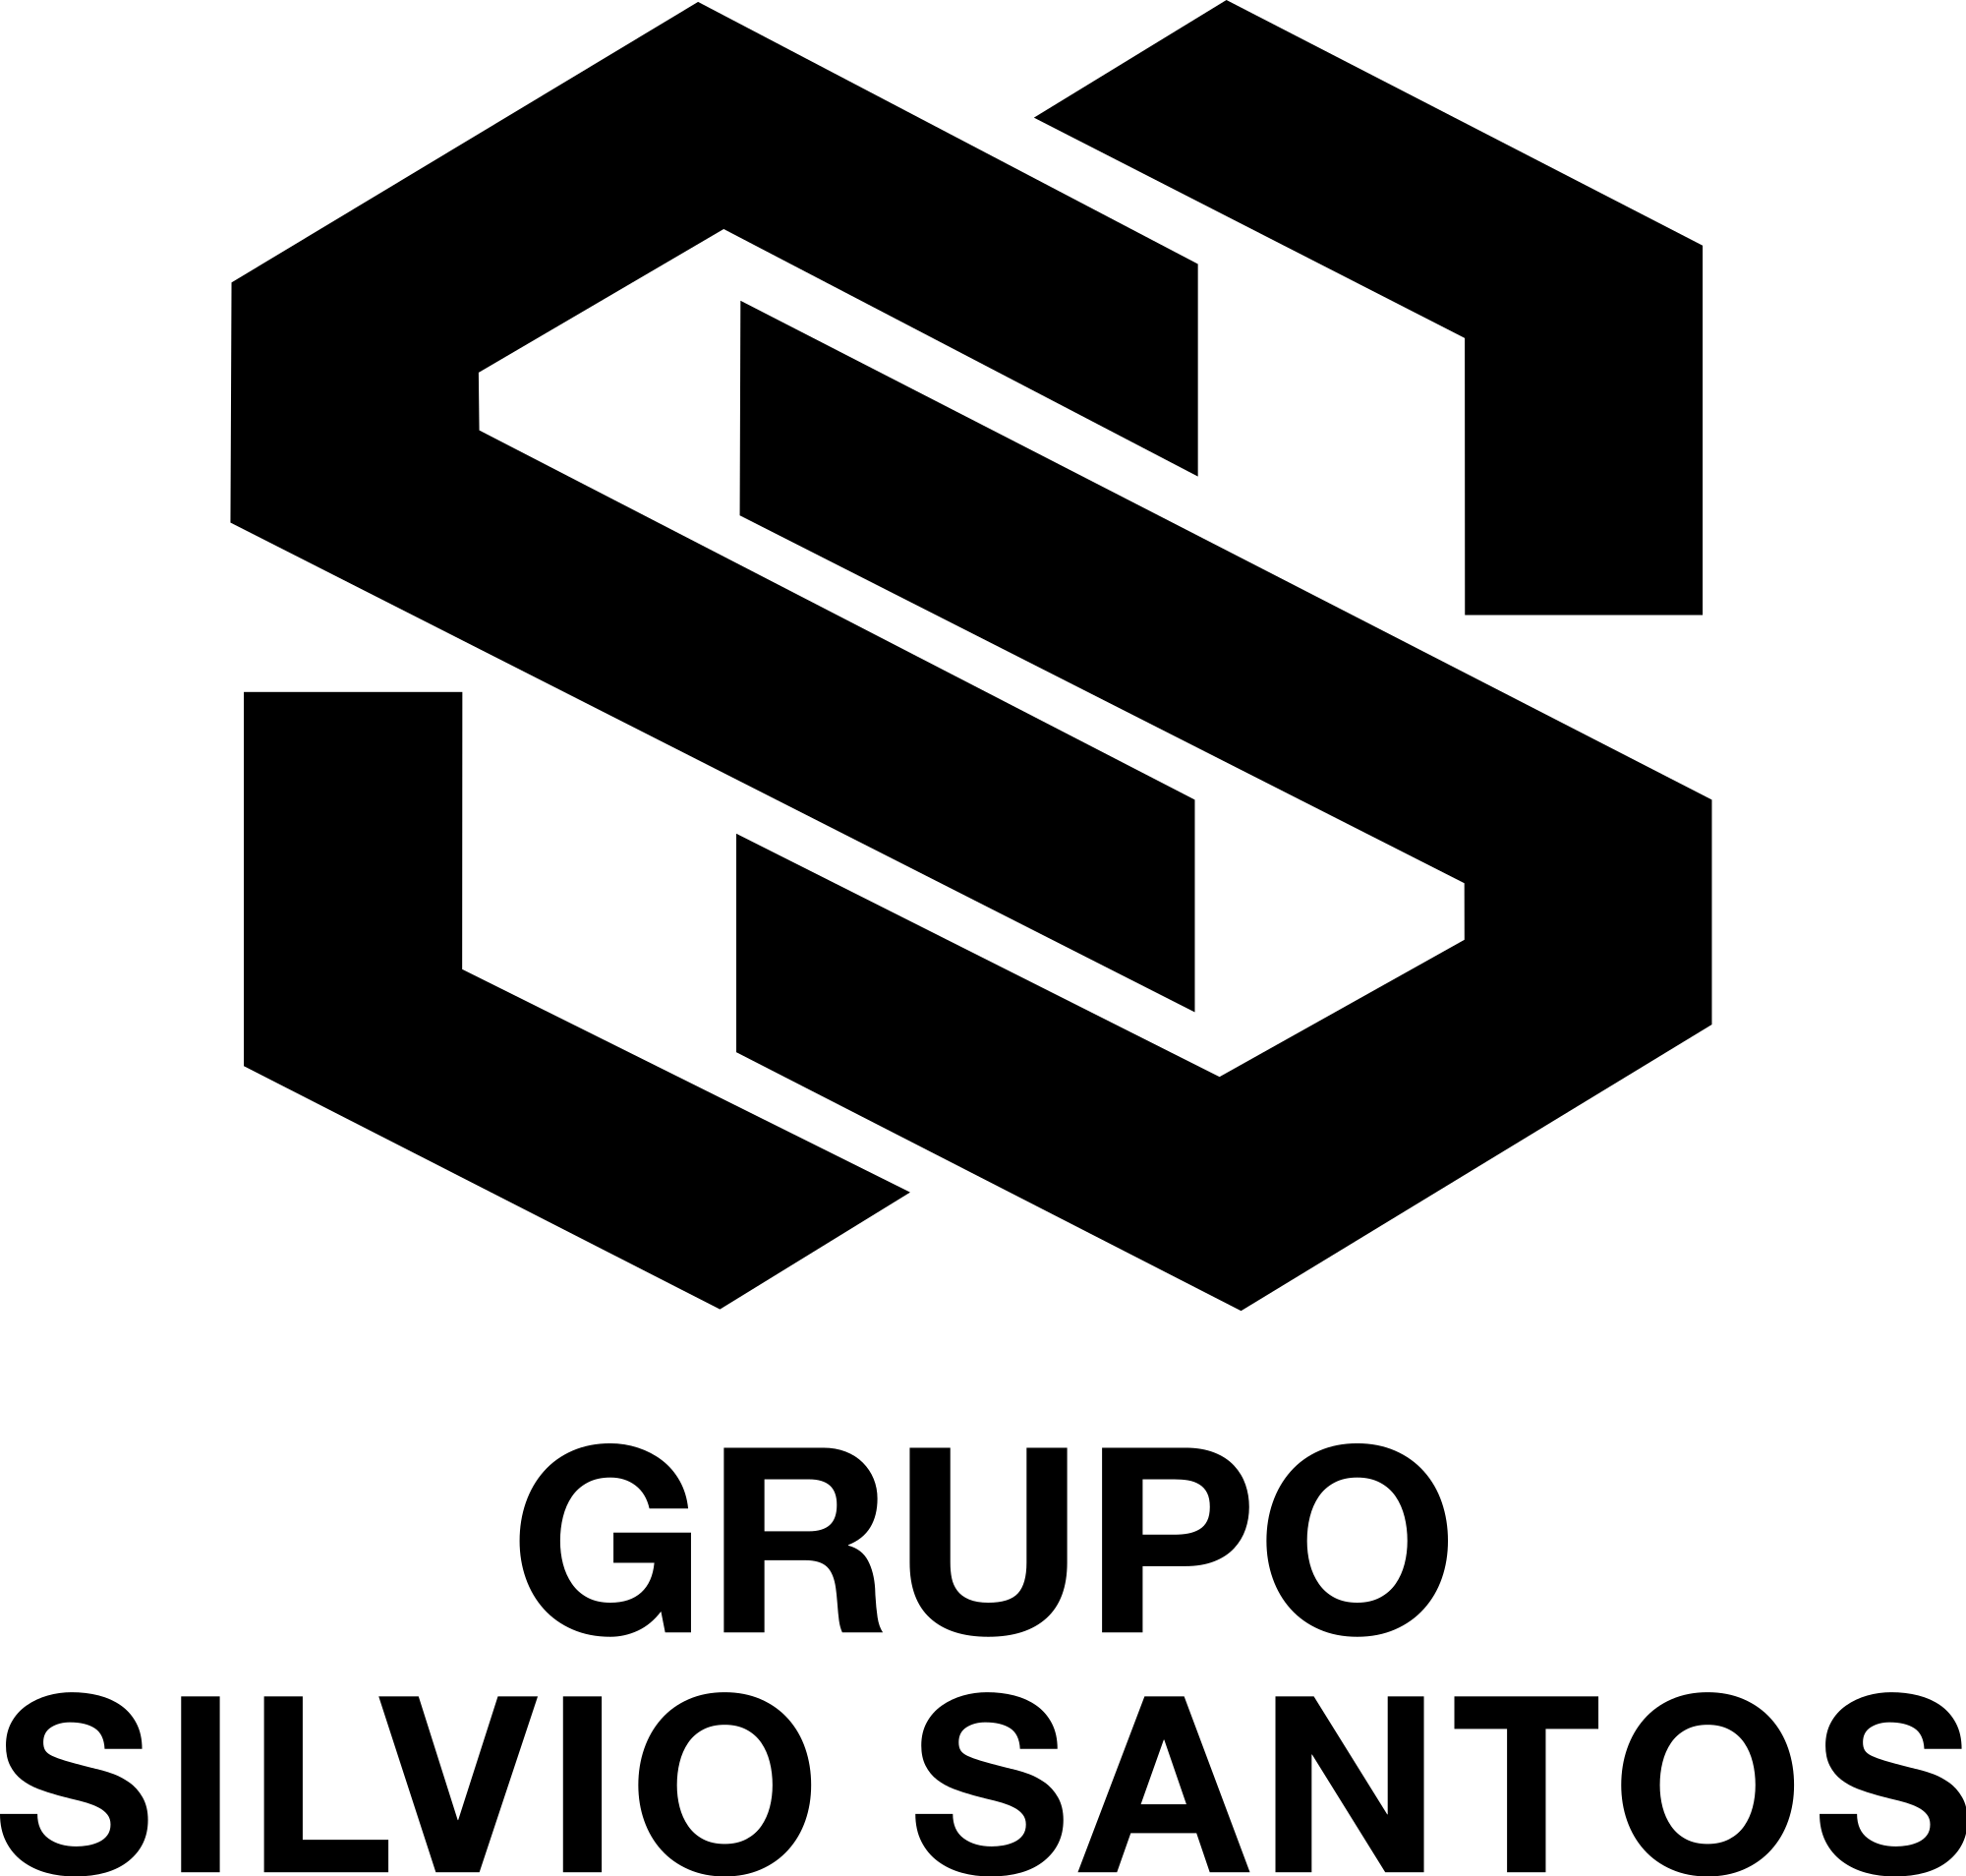 Santos Logo - Grupo Silvio Santos logo.svg